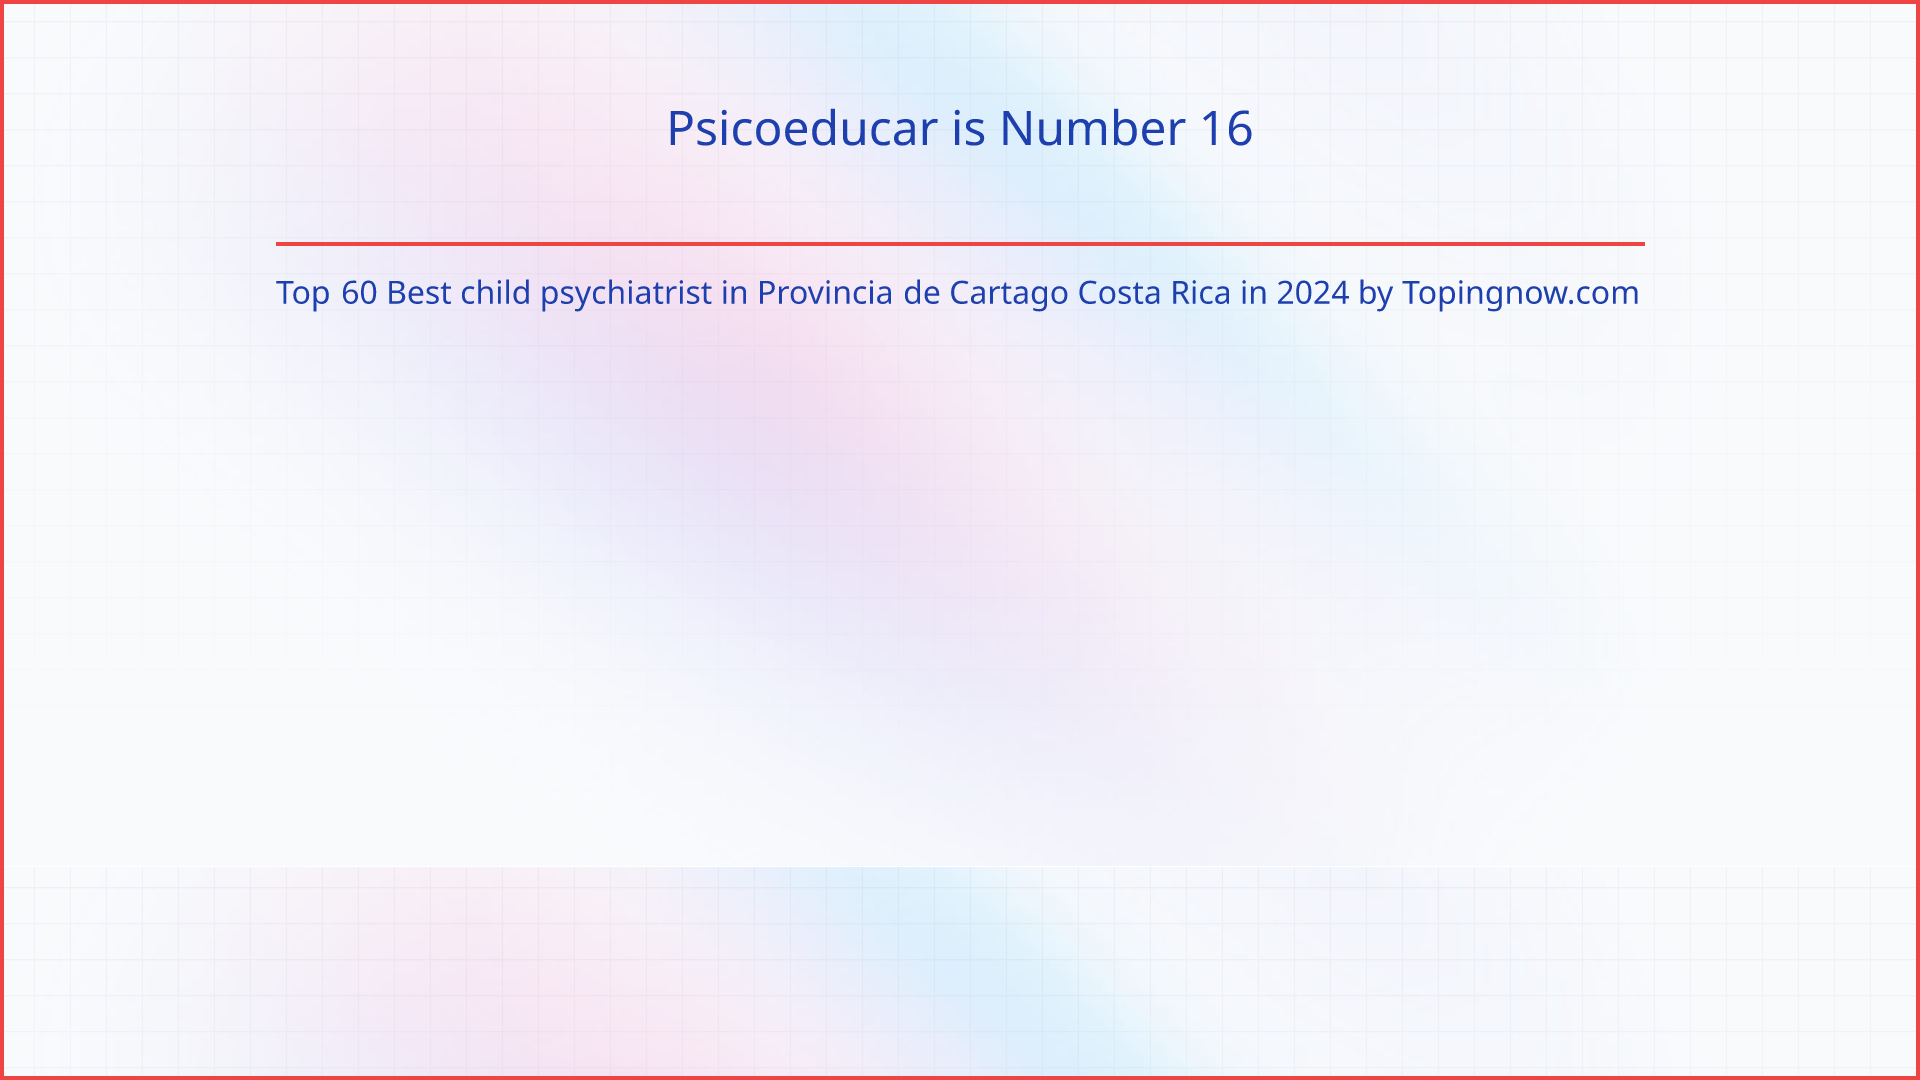 Psicoeducar: Top 60 Best child psychiatrist in Provincia de Cartago Costa Rica in 2024